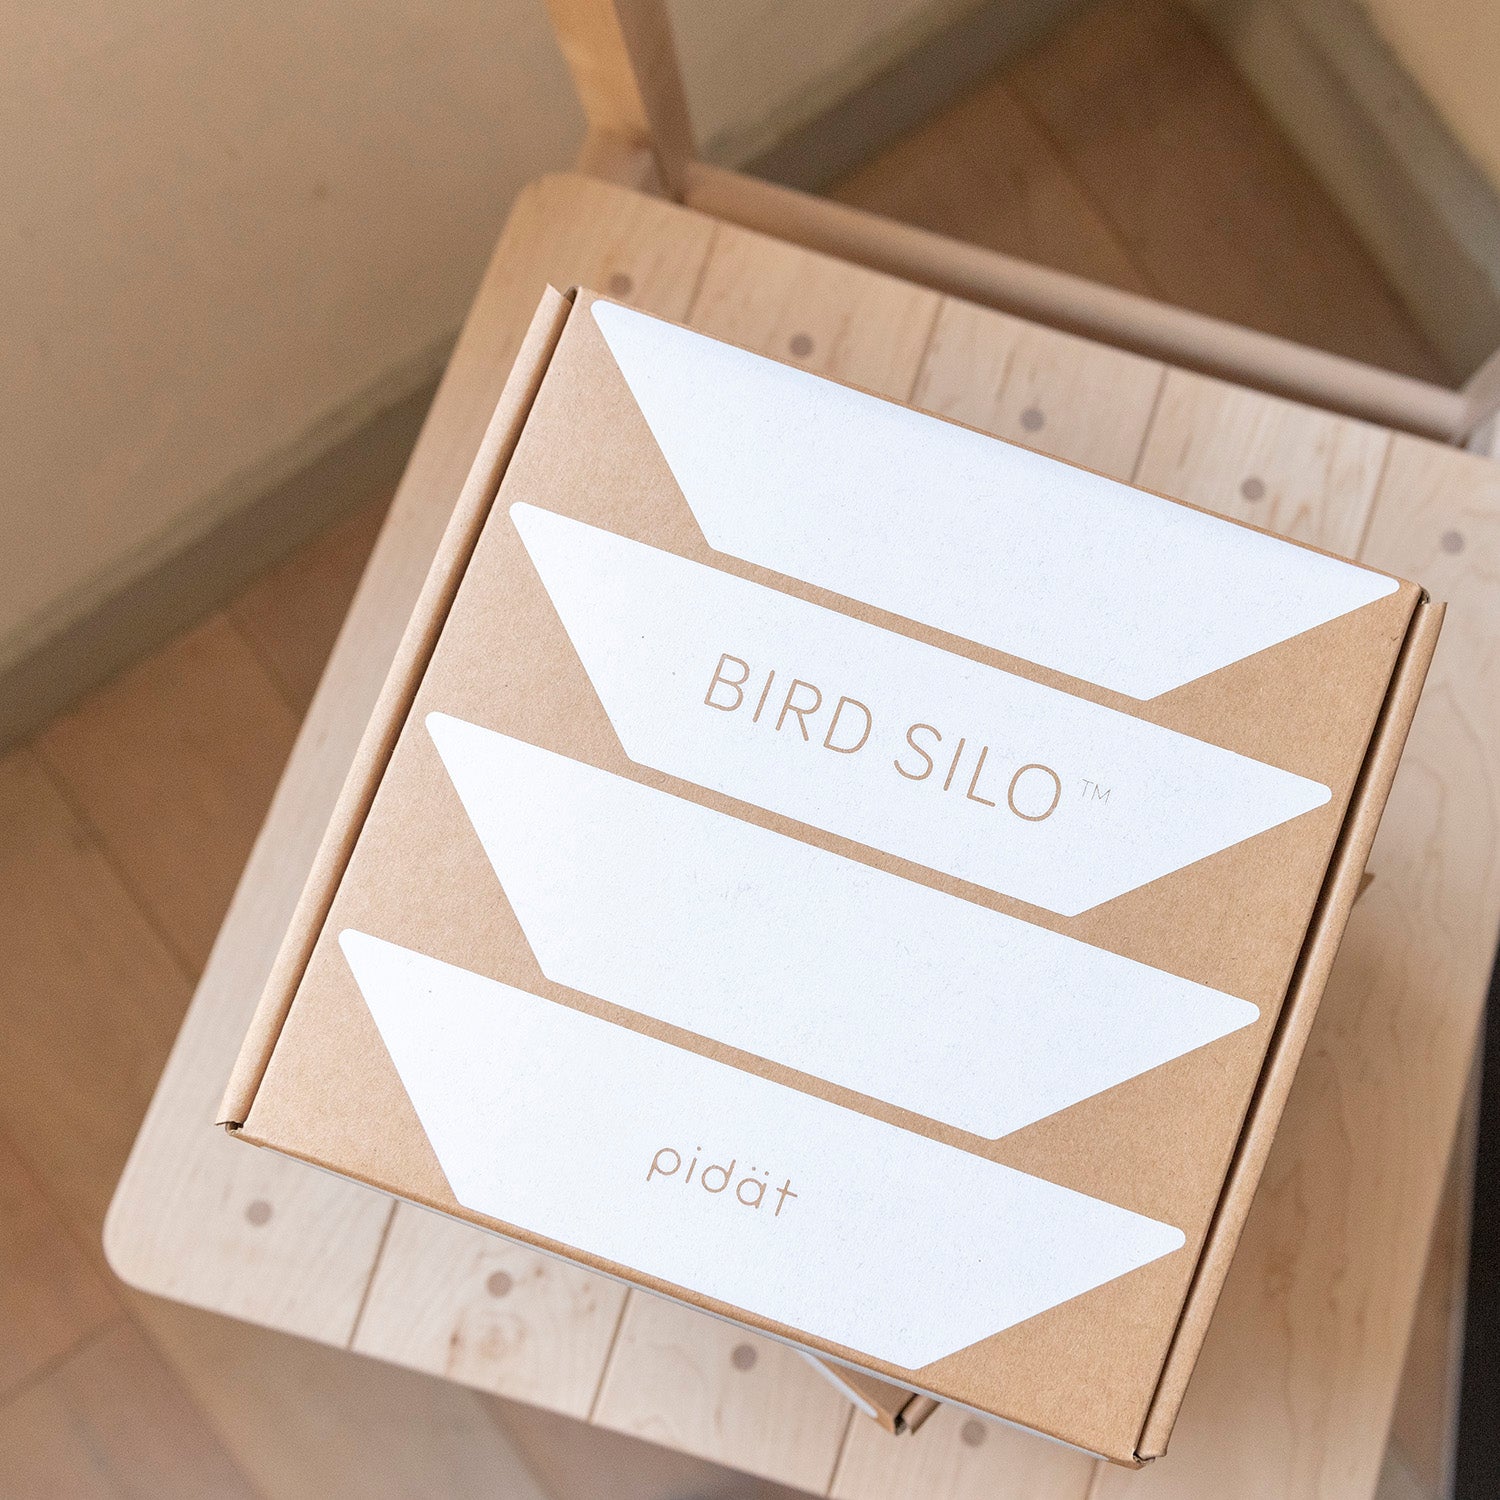 BIRD SILO